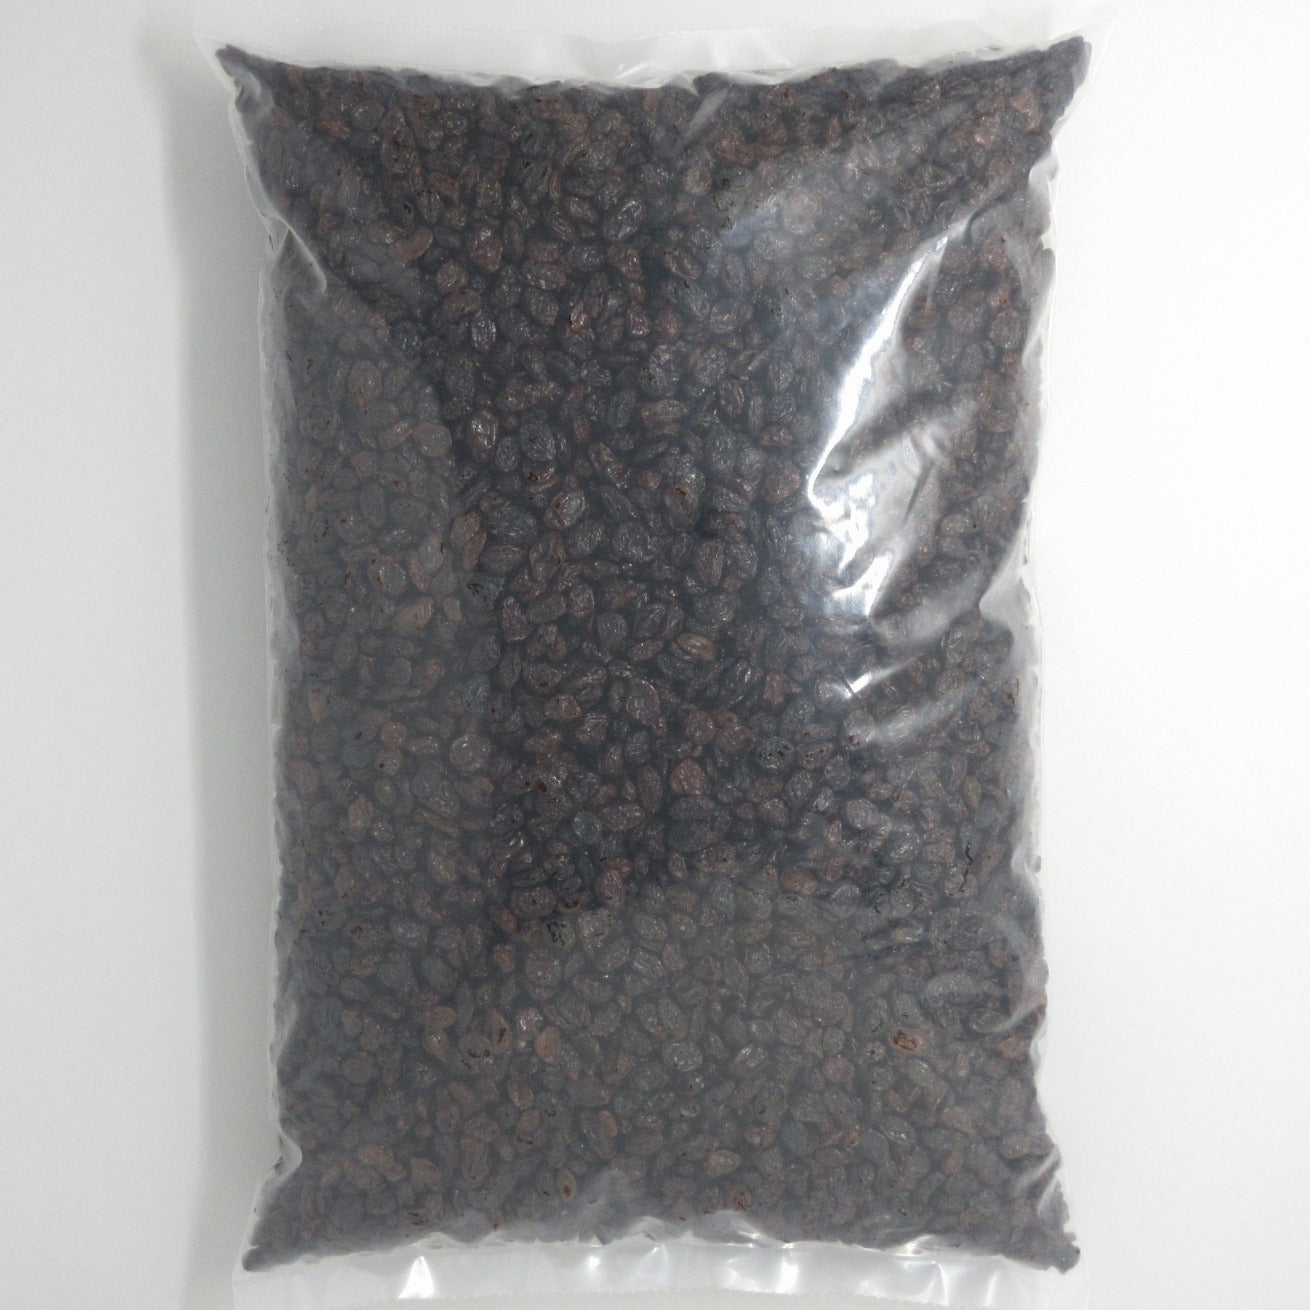 Flour Barrel product image - Thompson Raisins